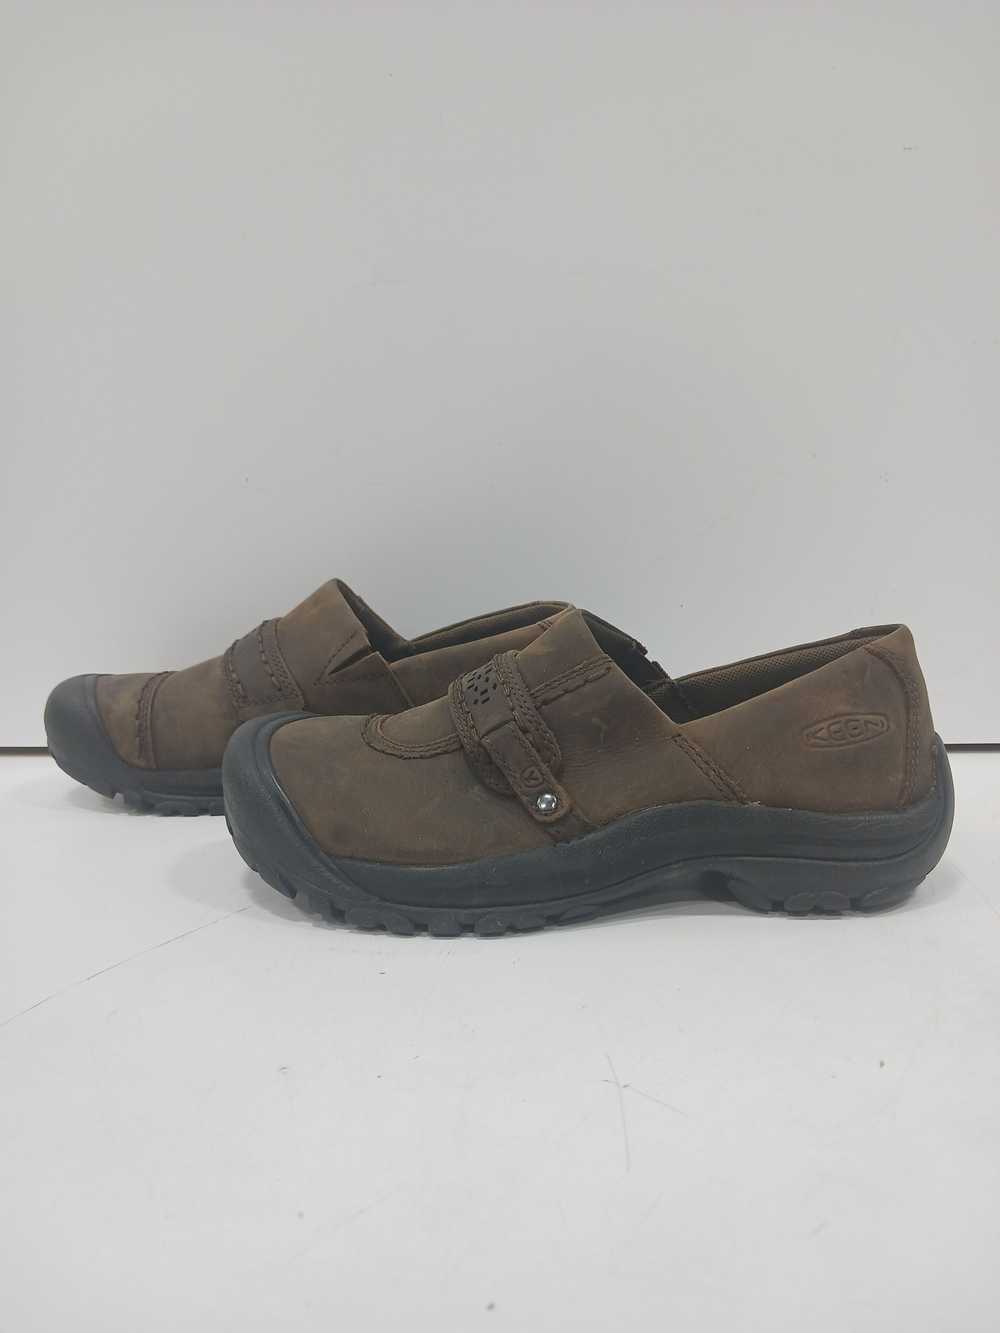 Keen 'Kaci' Brown Slip On Shoes Women's Size 7 - image 2